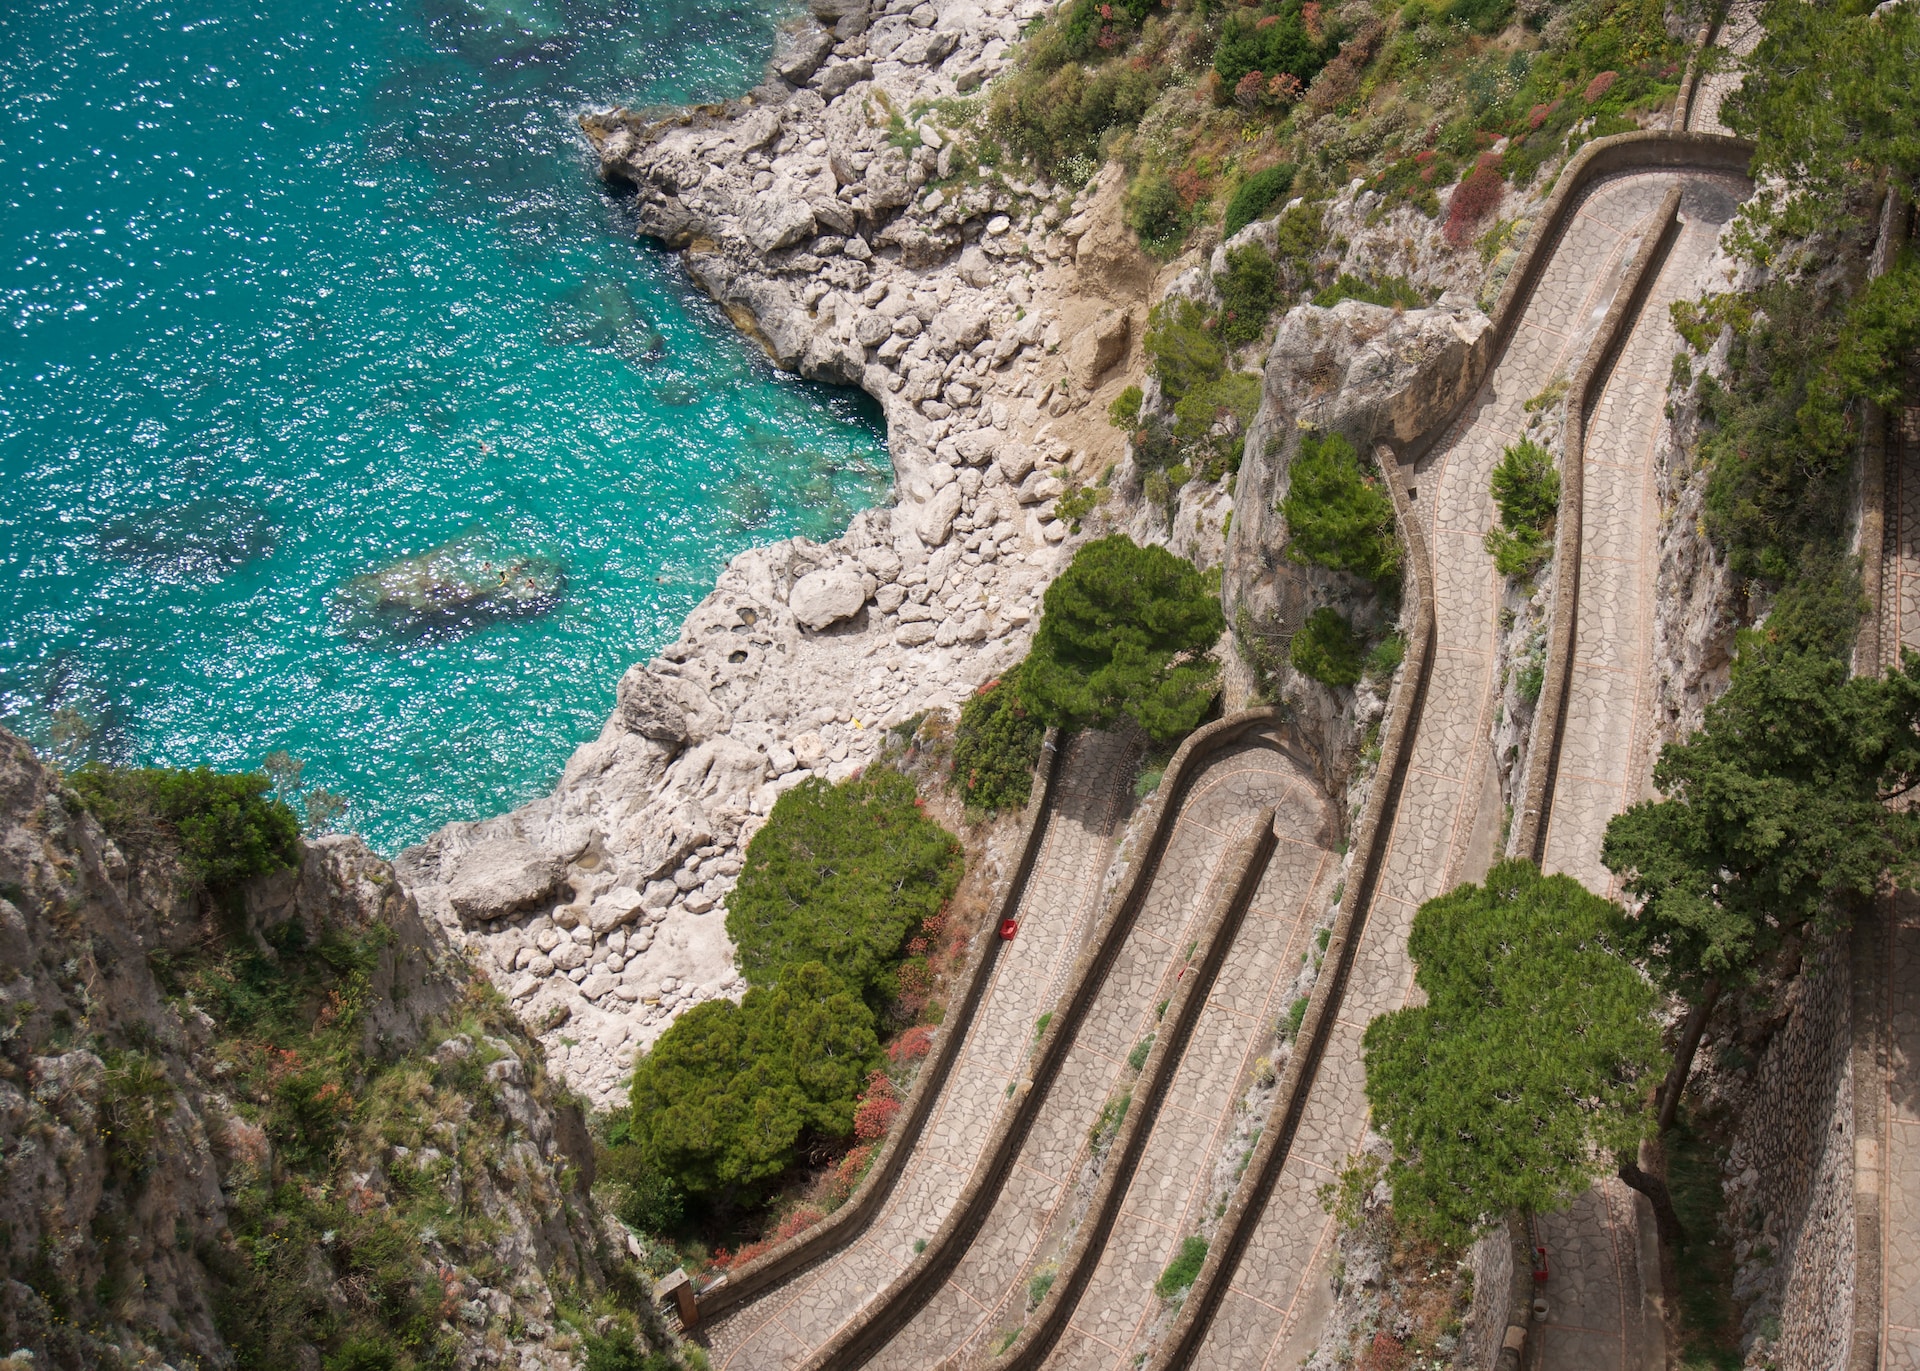 Narrow winding pathway down to the shore on Capri, Italy